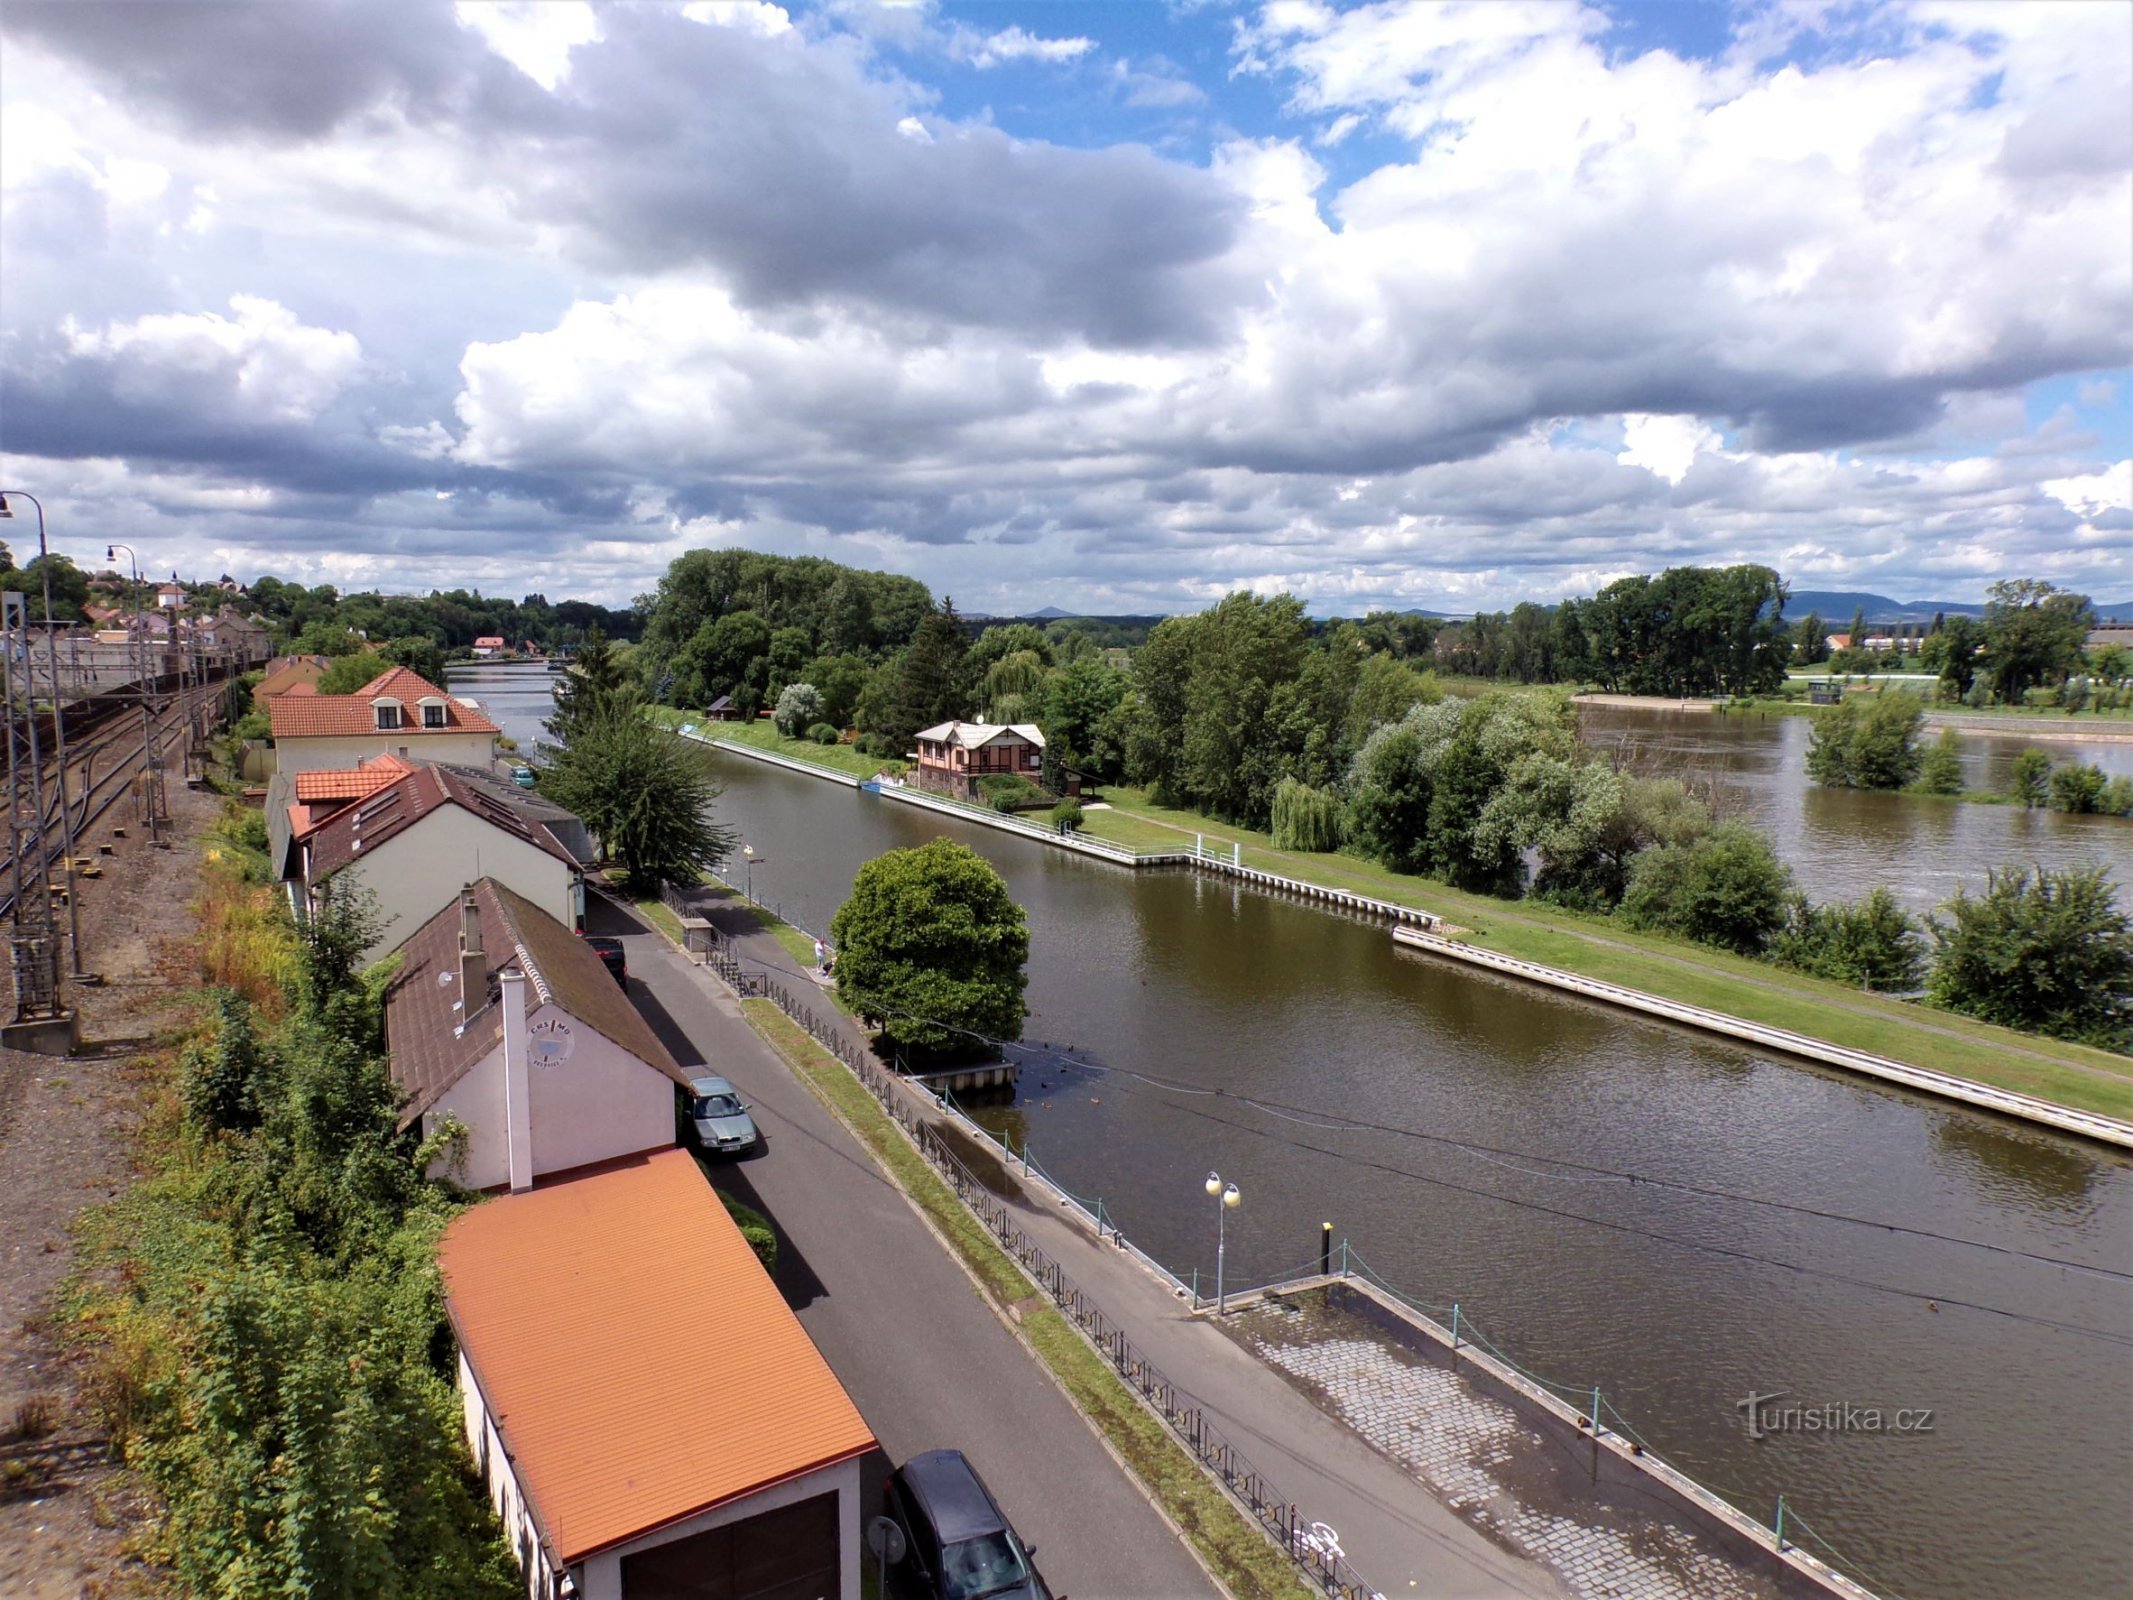 Uitzicht op het eiland vanaf de Ervín Špindler-brug (Roudnice nad Labem, 9.7.2021/XNUMX/XNUMX)